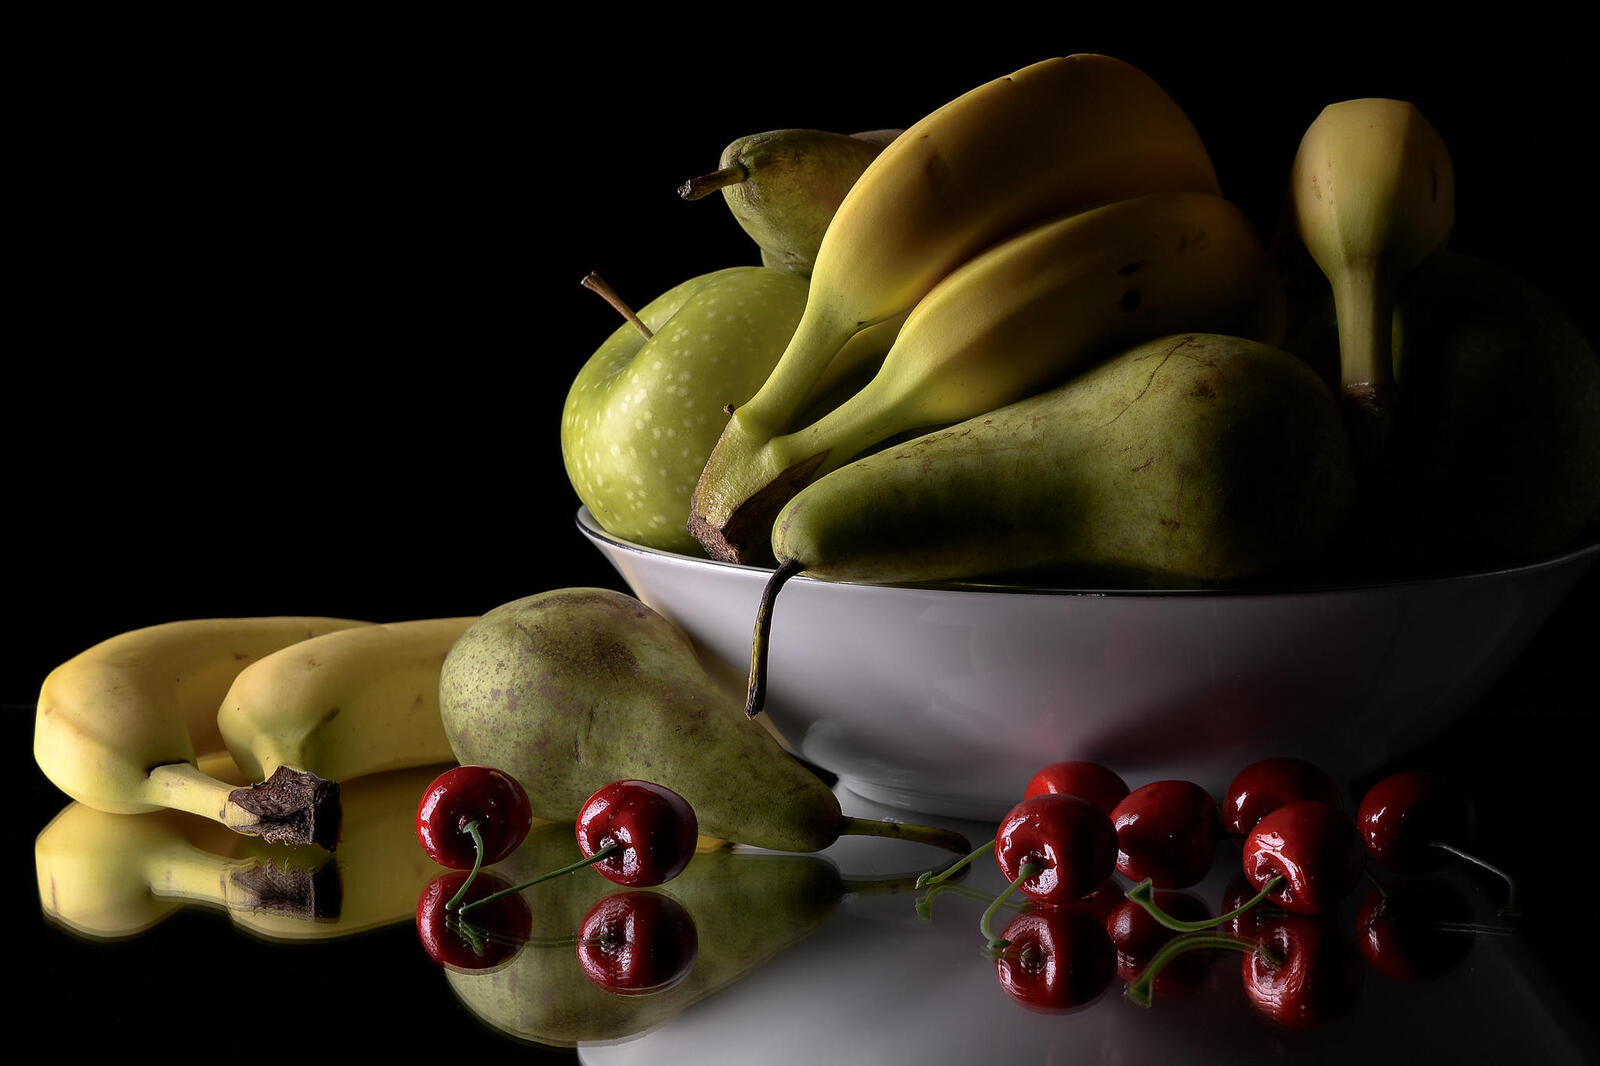 Wallpapers fruits apples bananas on the desktop